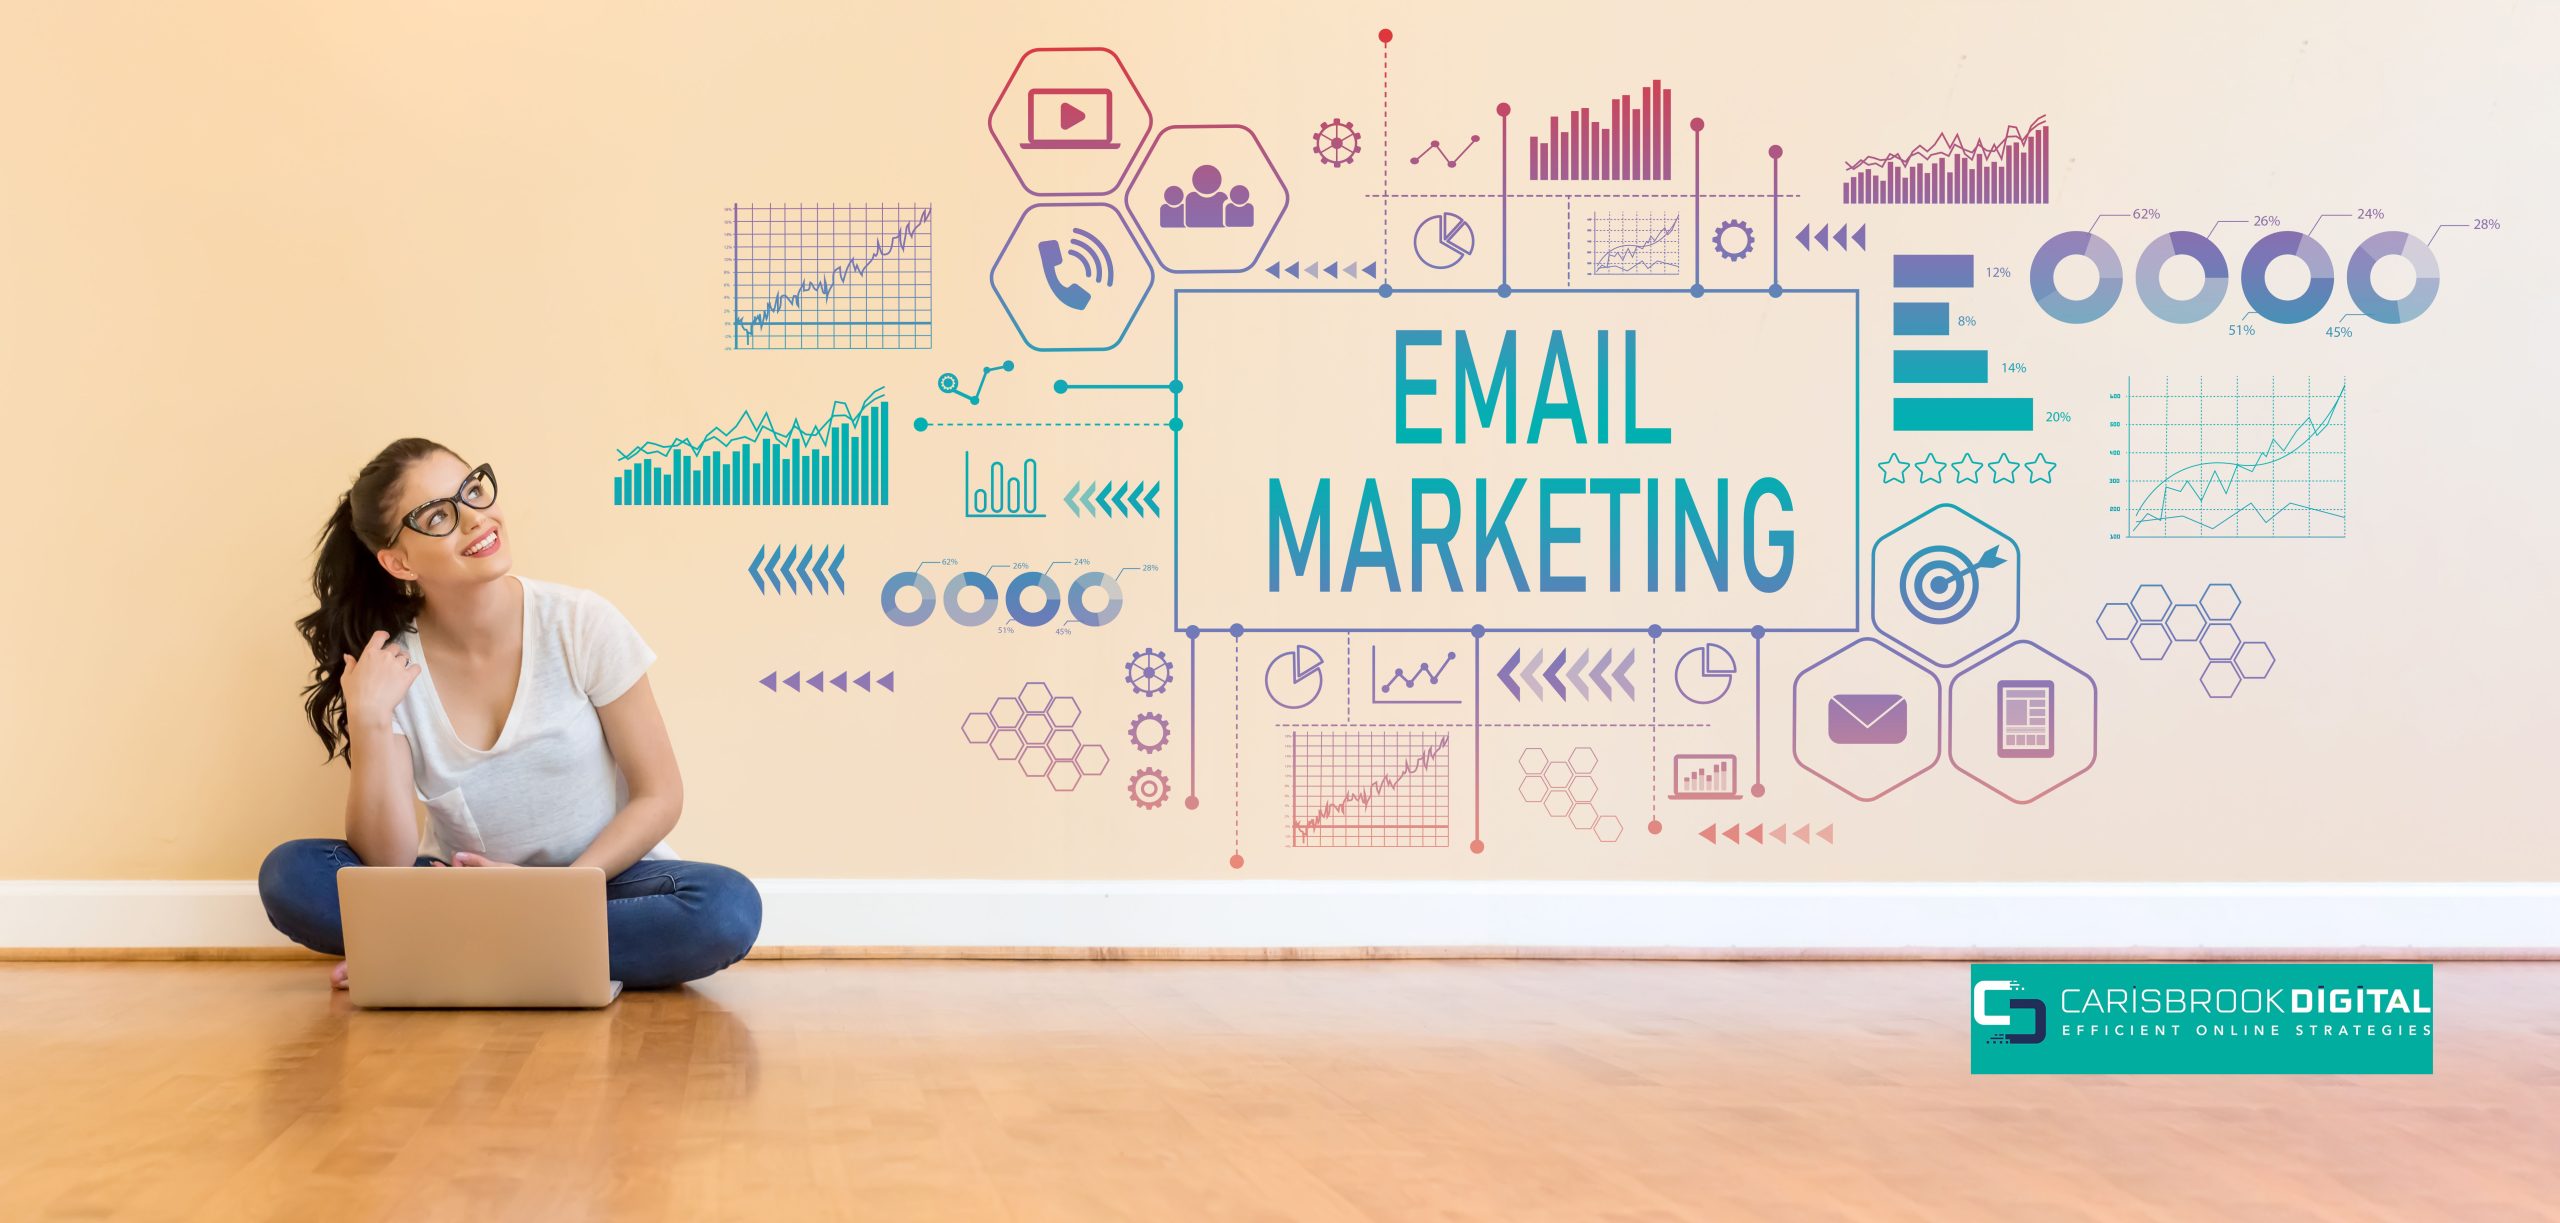 Email Marketing Services at Carisbrook Digital